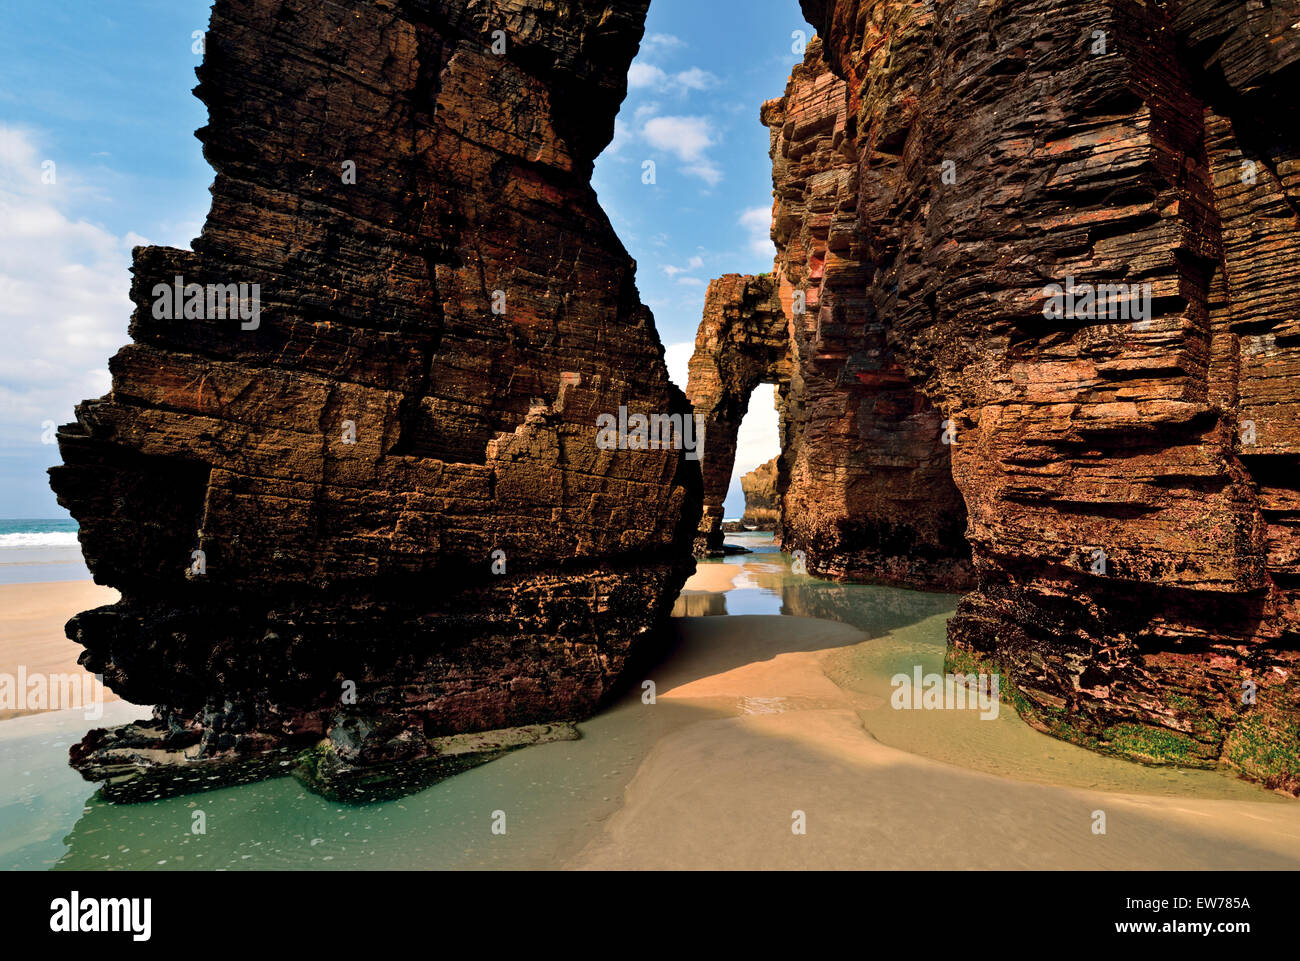 España, Galicia: impresionante arco en la Catedral de roca (playa Praia como Catedrais) Foto de stock